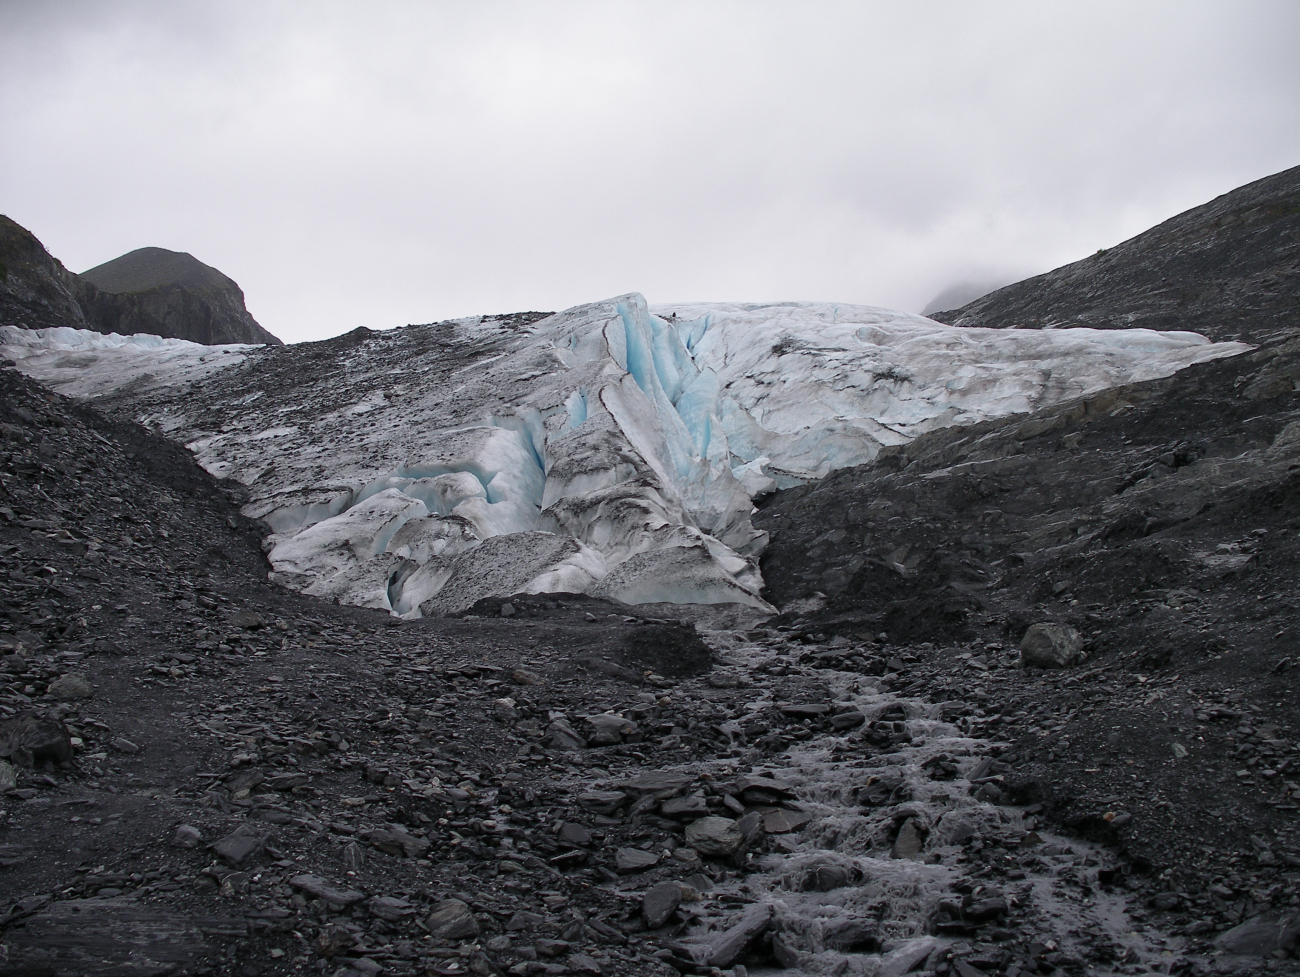 A view of Worthington Glacier